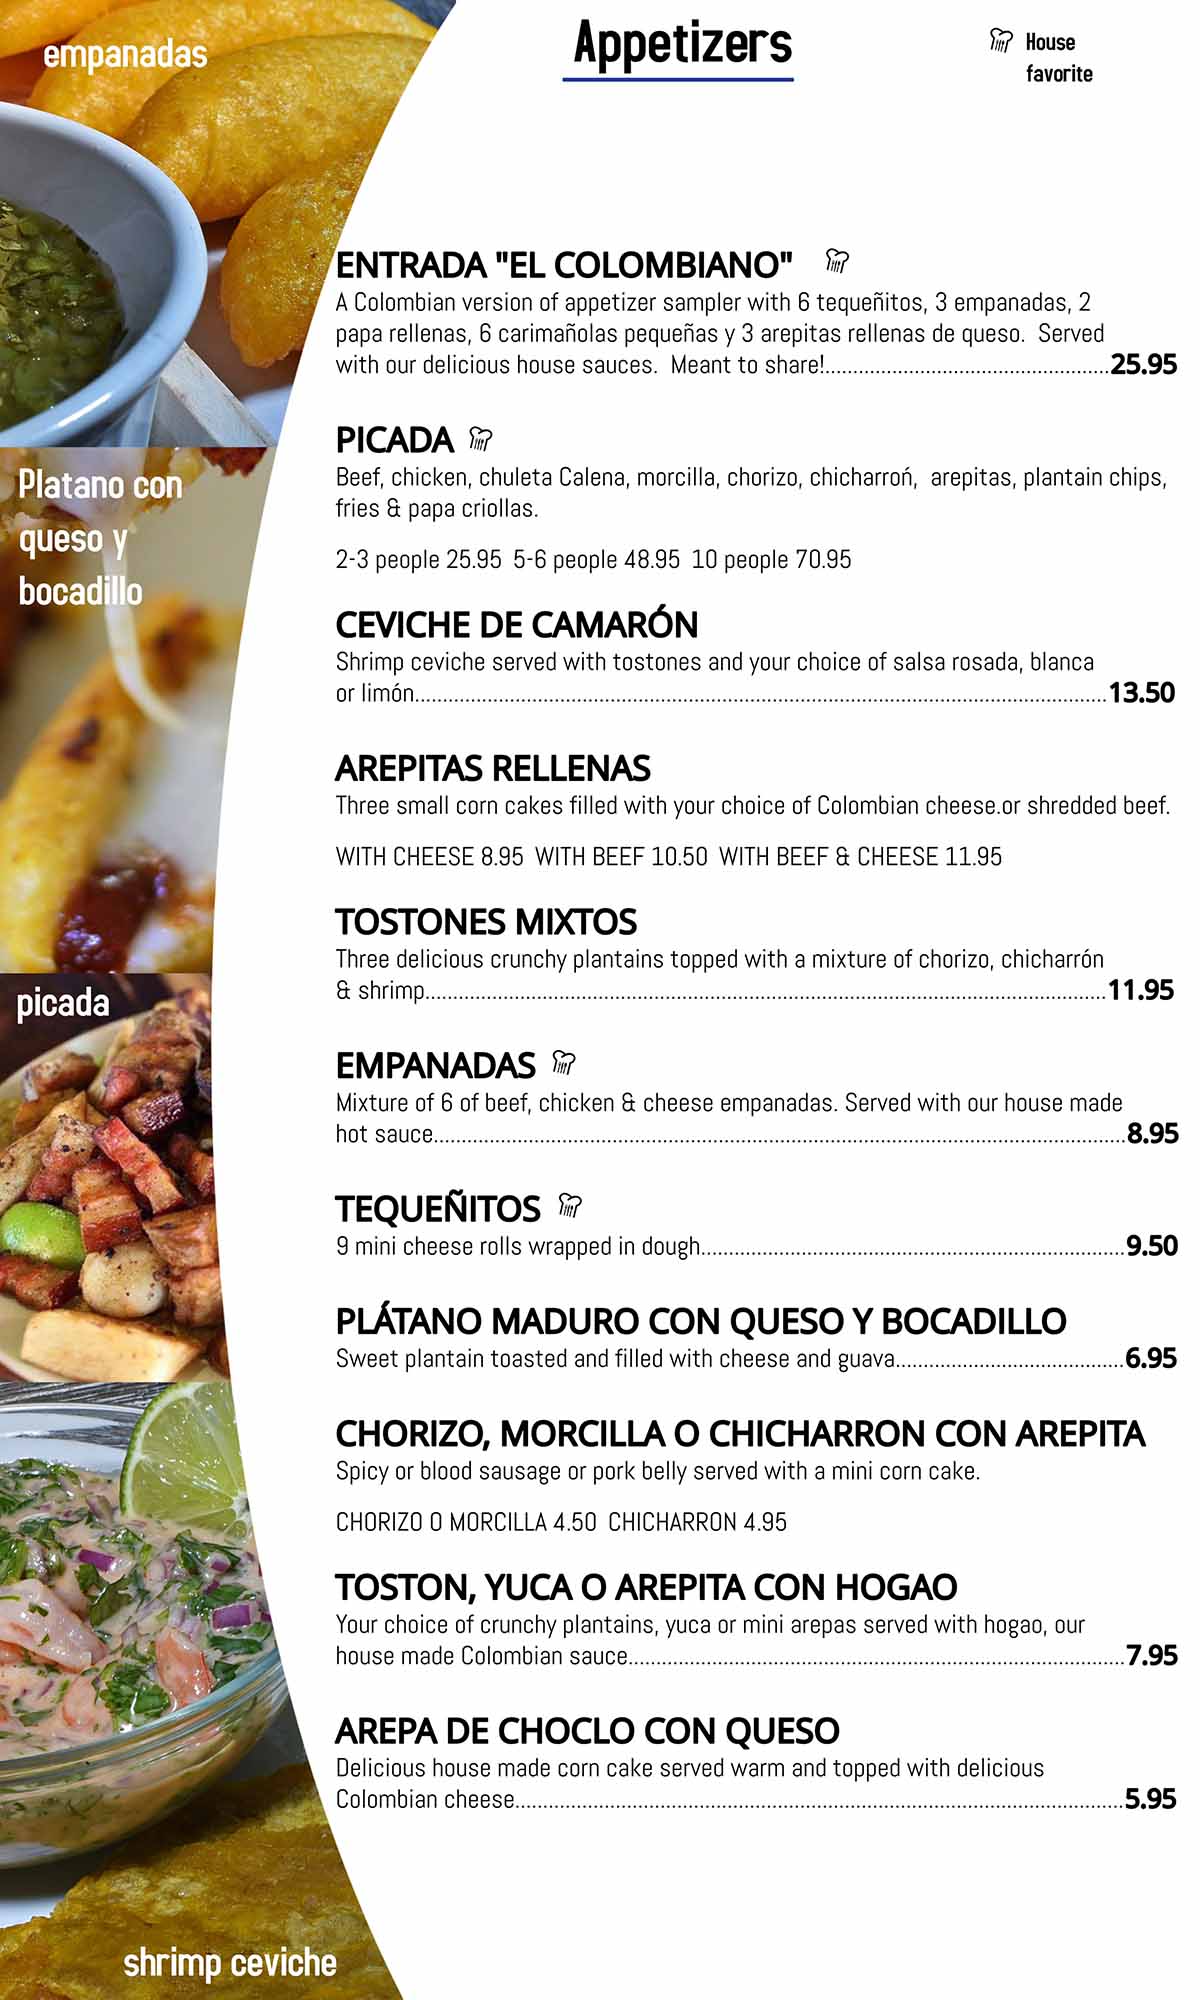 El Colombiano - Menu - Appetizers - Page 1